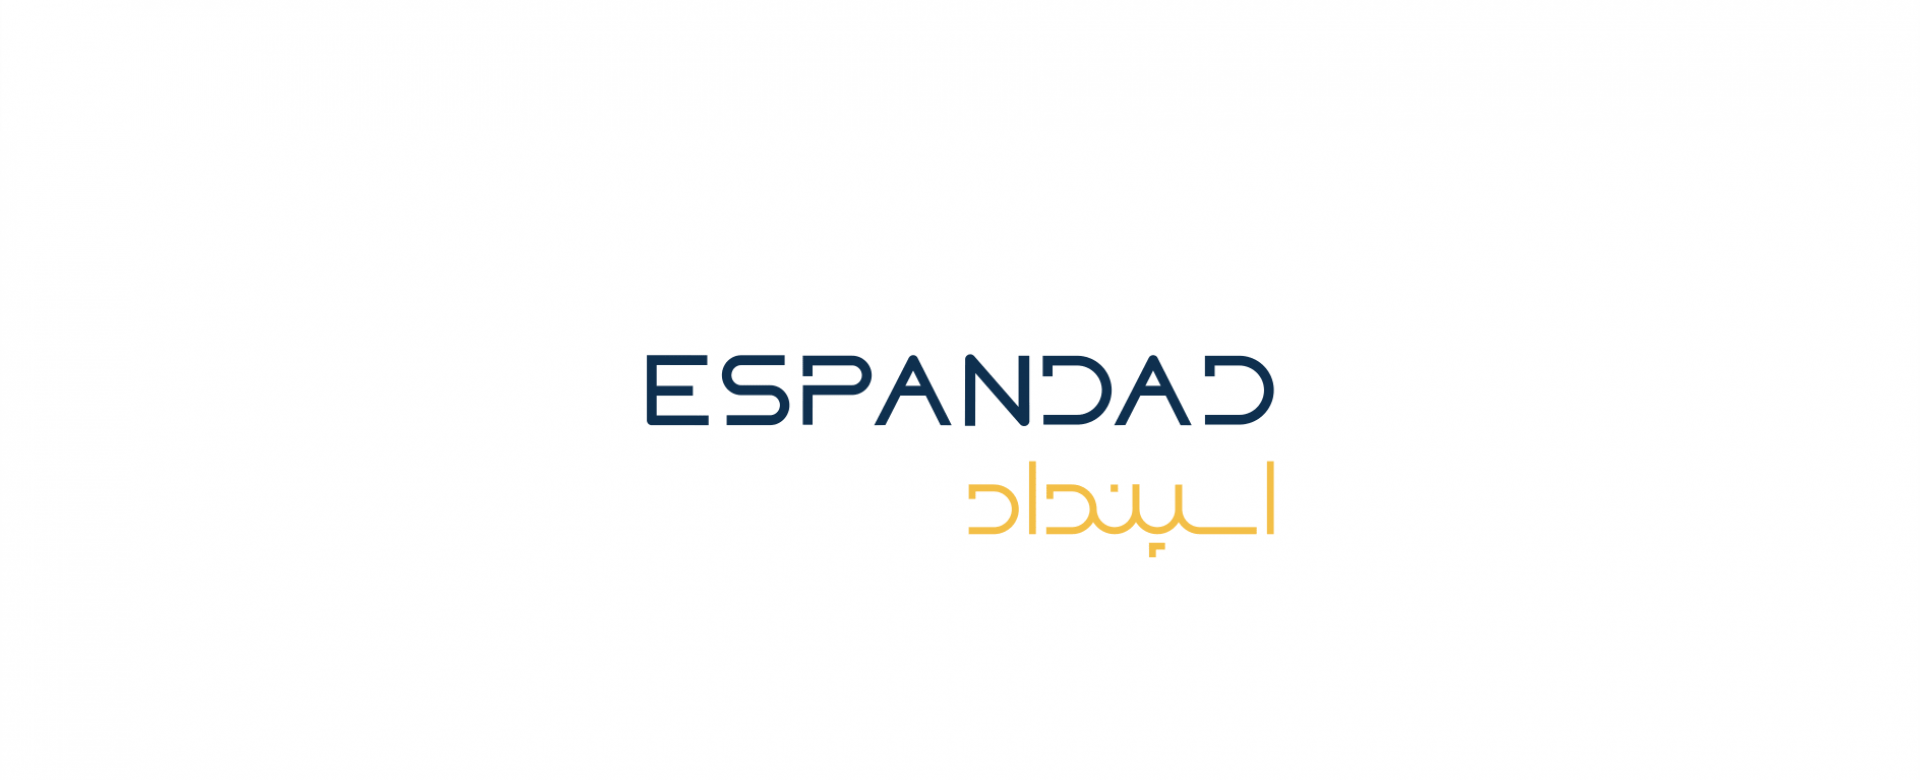 Espandad logo design by ZEN Branding agency طراحی لوگو اسپنداد توسط آژانس برندسازی ذن (15)